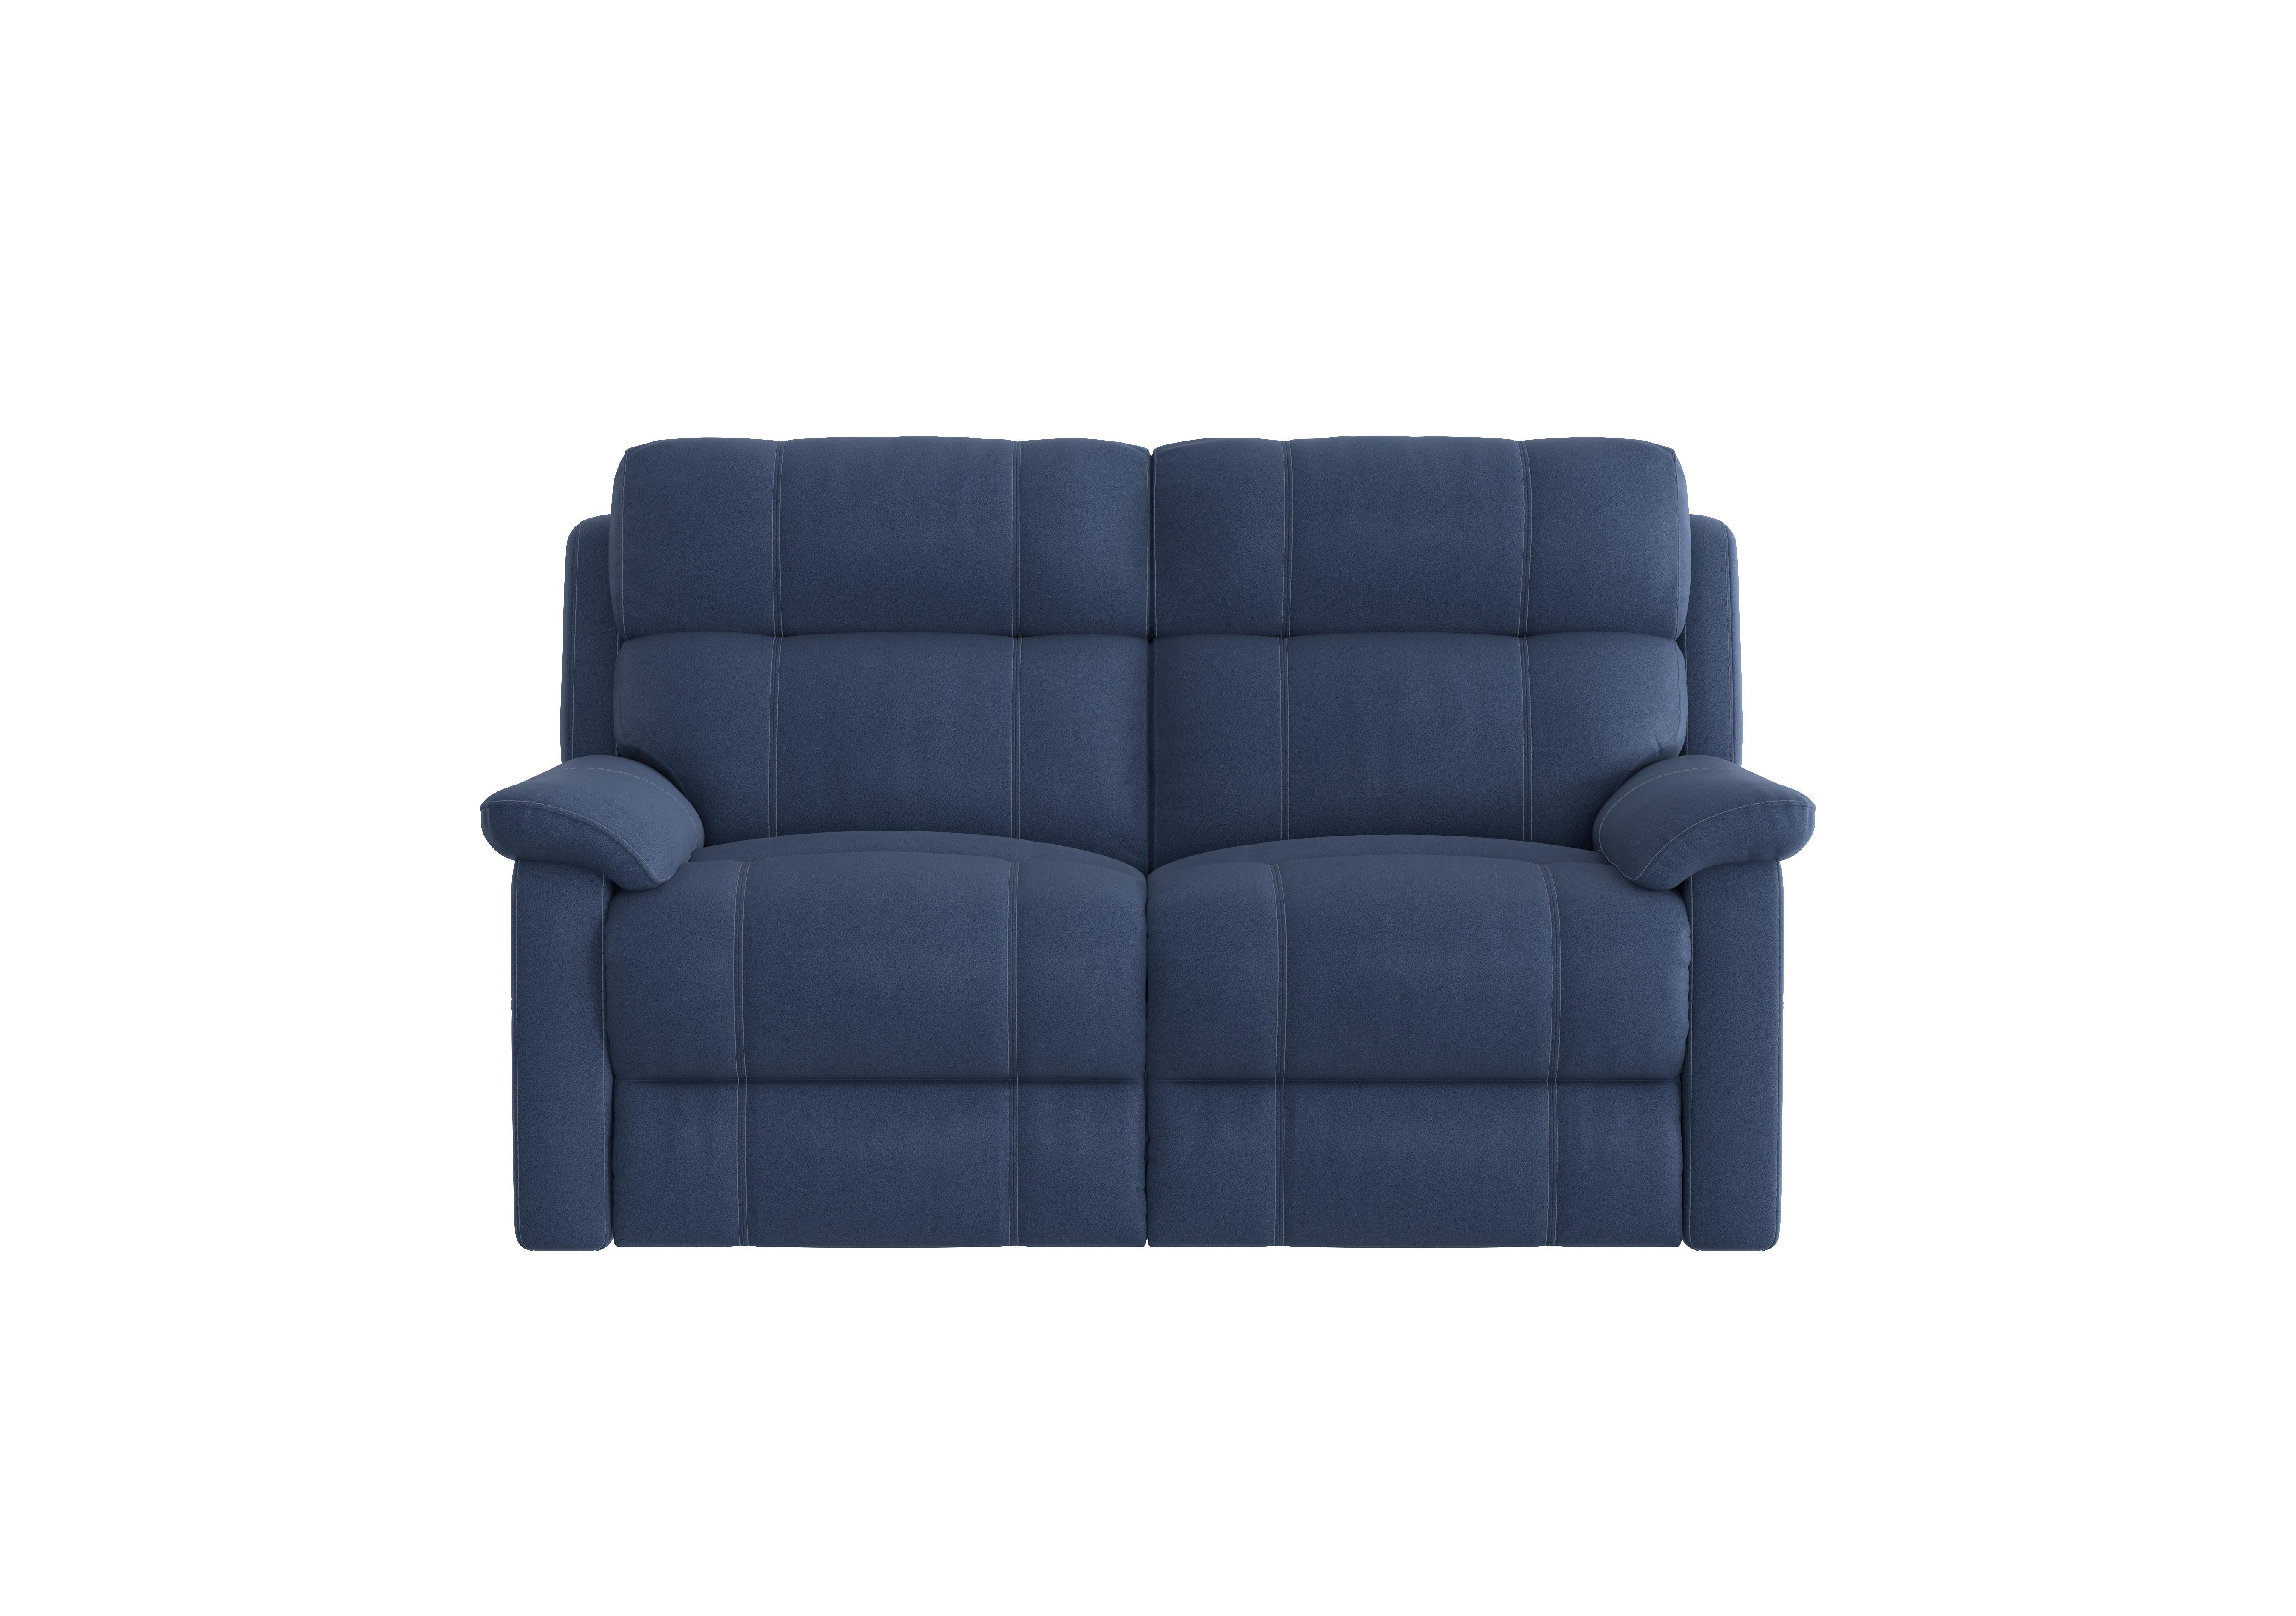 Relax Station Komodo 2 Seater Fabric Recliner Sofa in Bfa-Blj-R10 Blue on Furniture Village